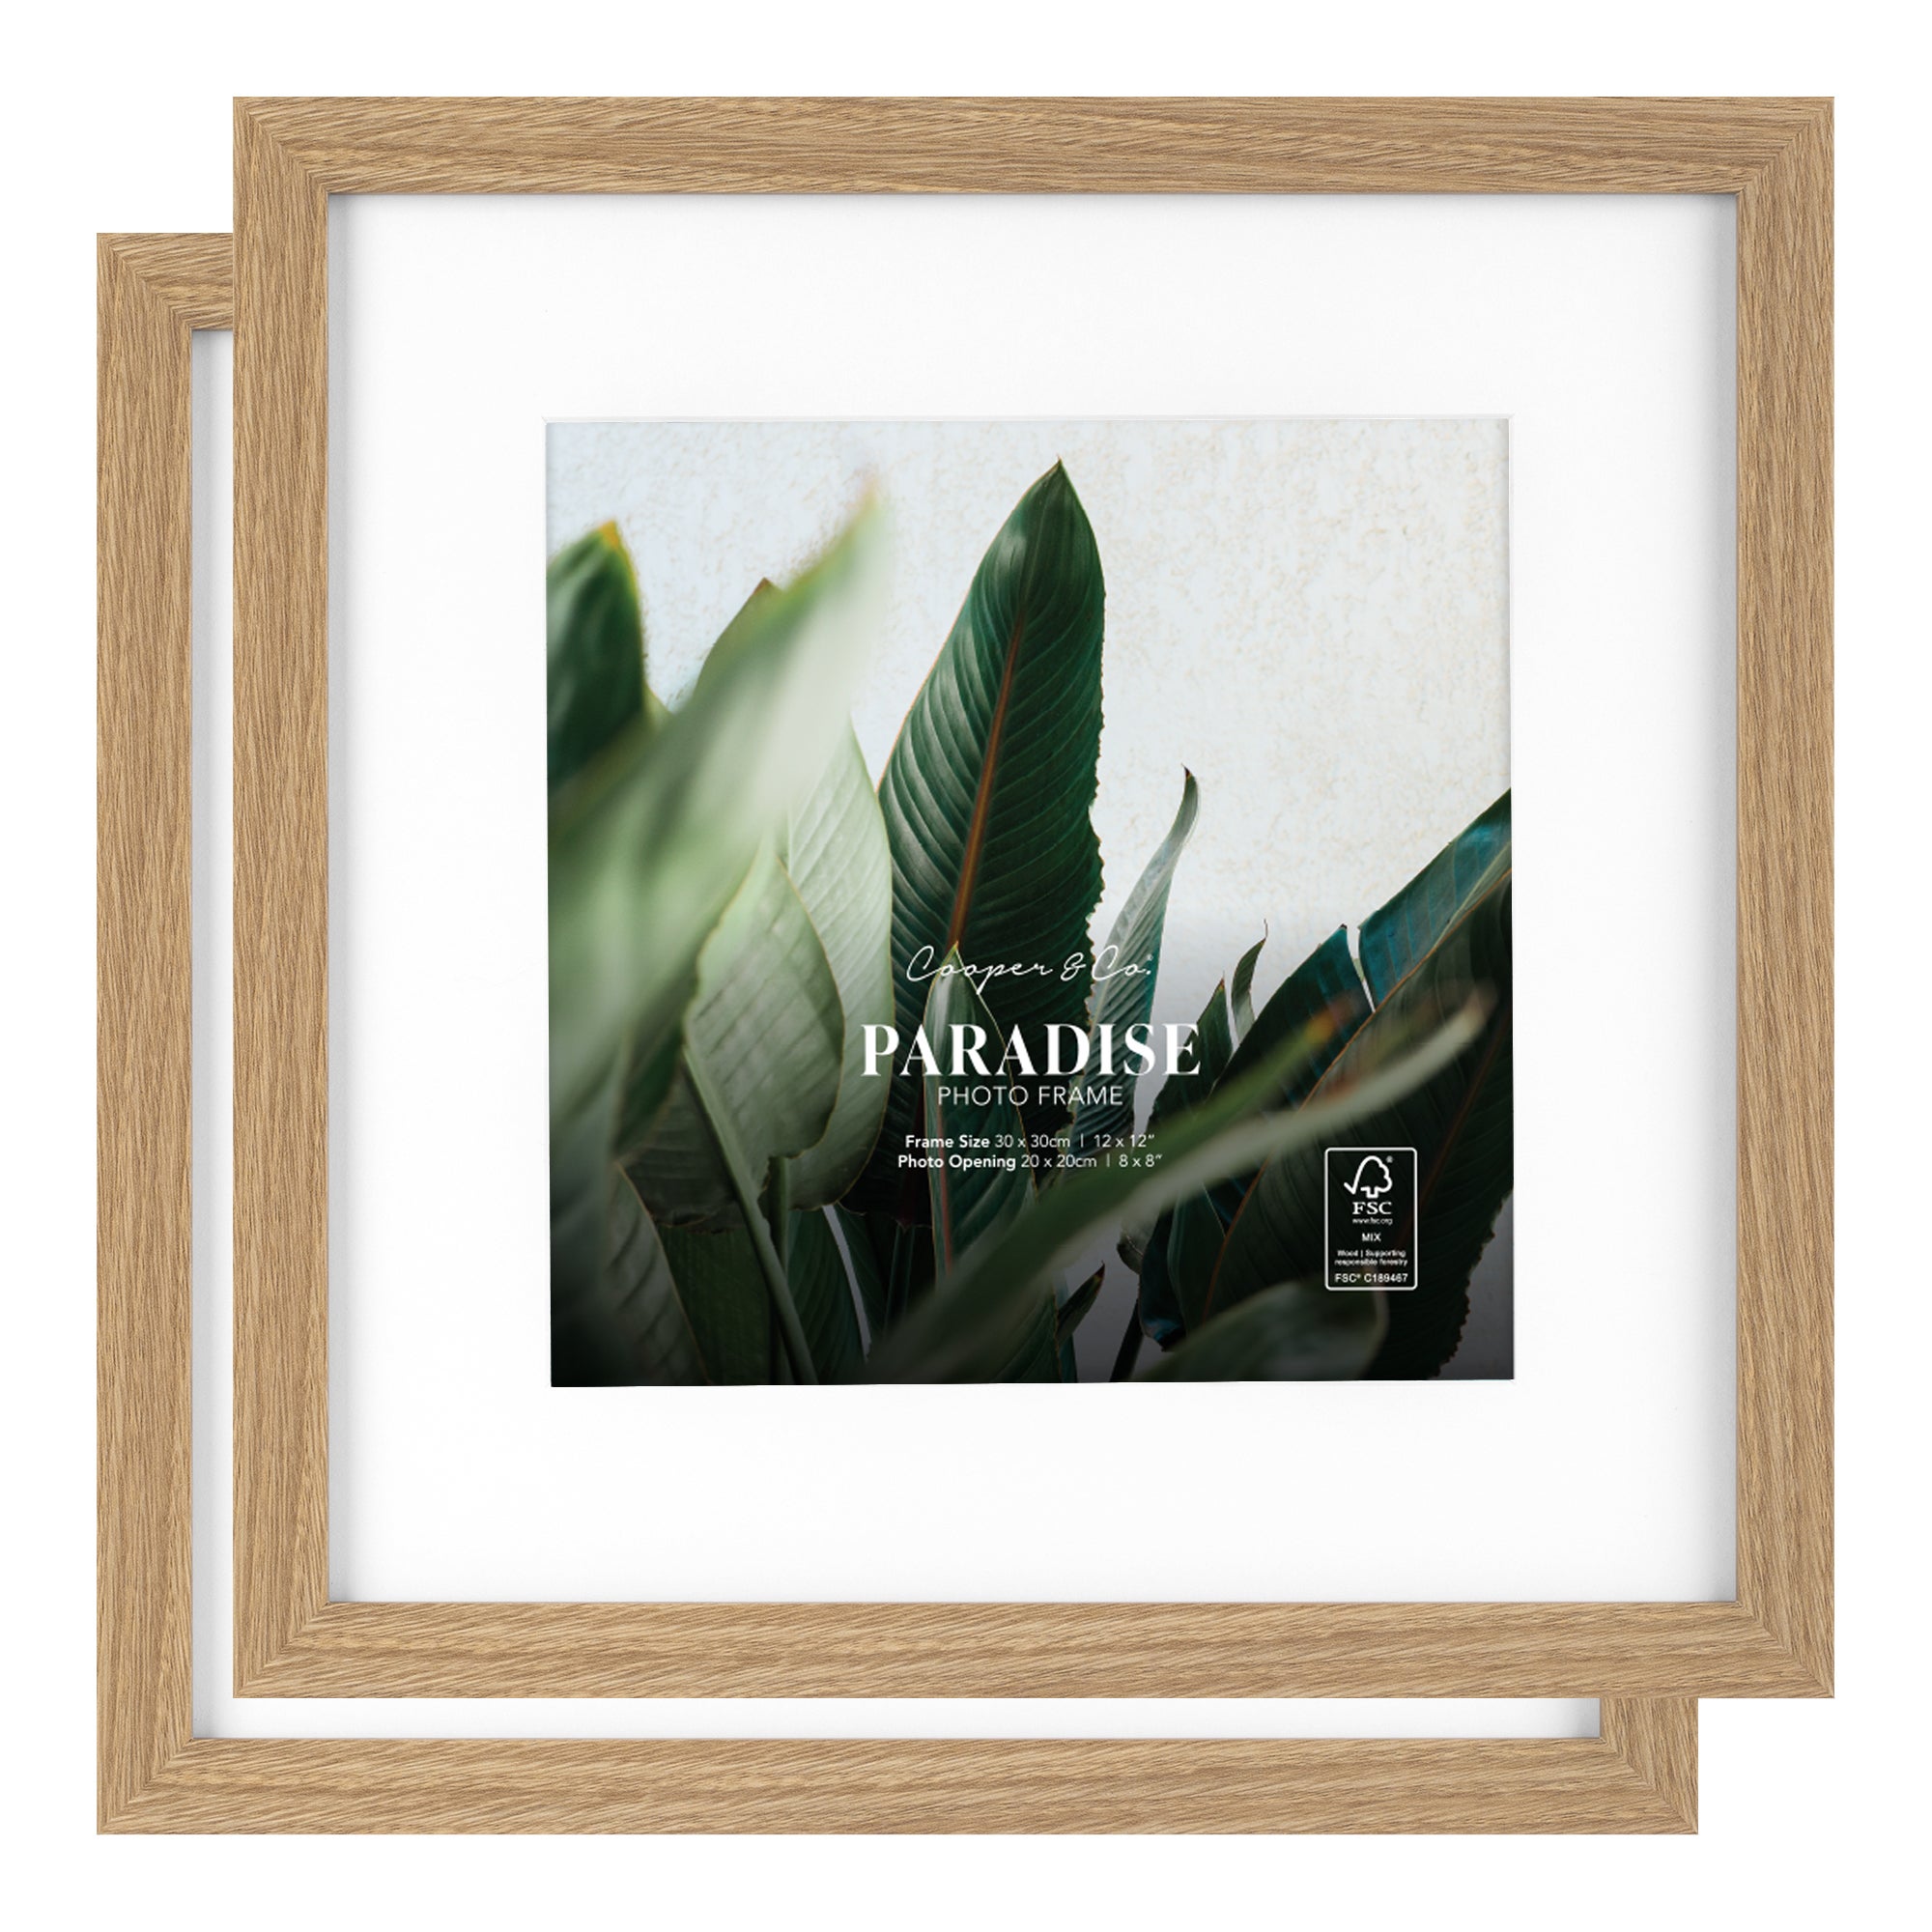 Cooper & Co. Set Of 2 30x30cm Matt to 20x20cm Oak Premium Paradise Wooden Photo Frame